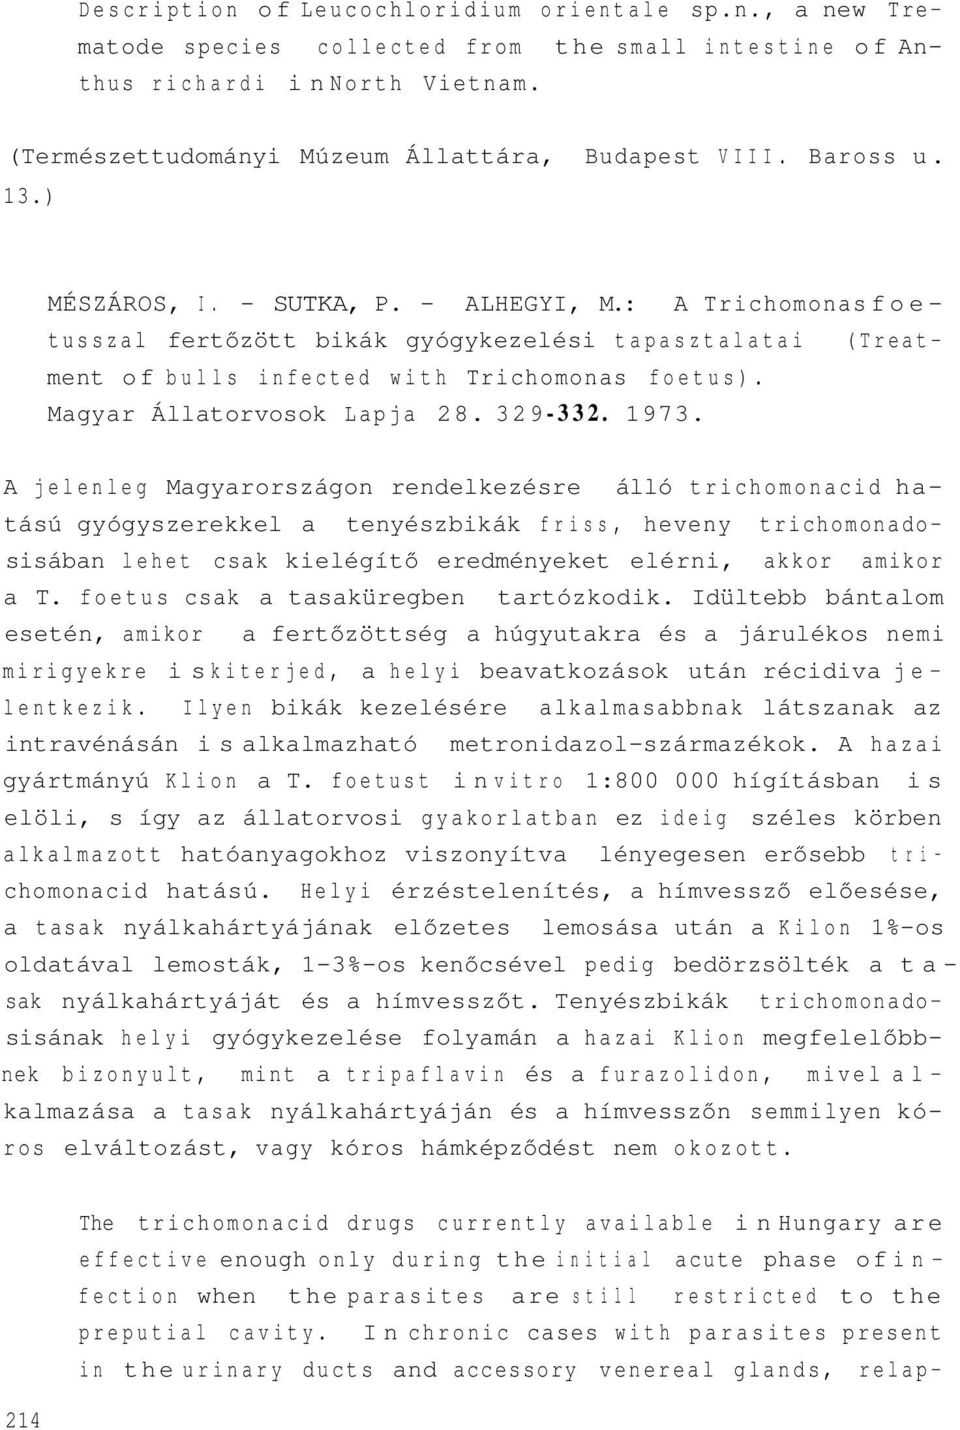 Magyar Állatorvosok Lapja 28. 329-332. 1973.